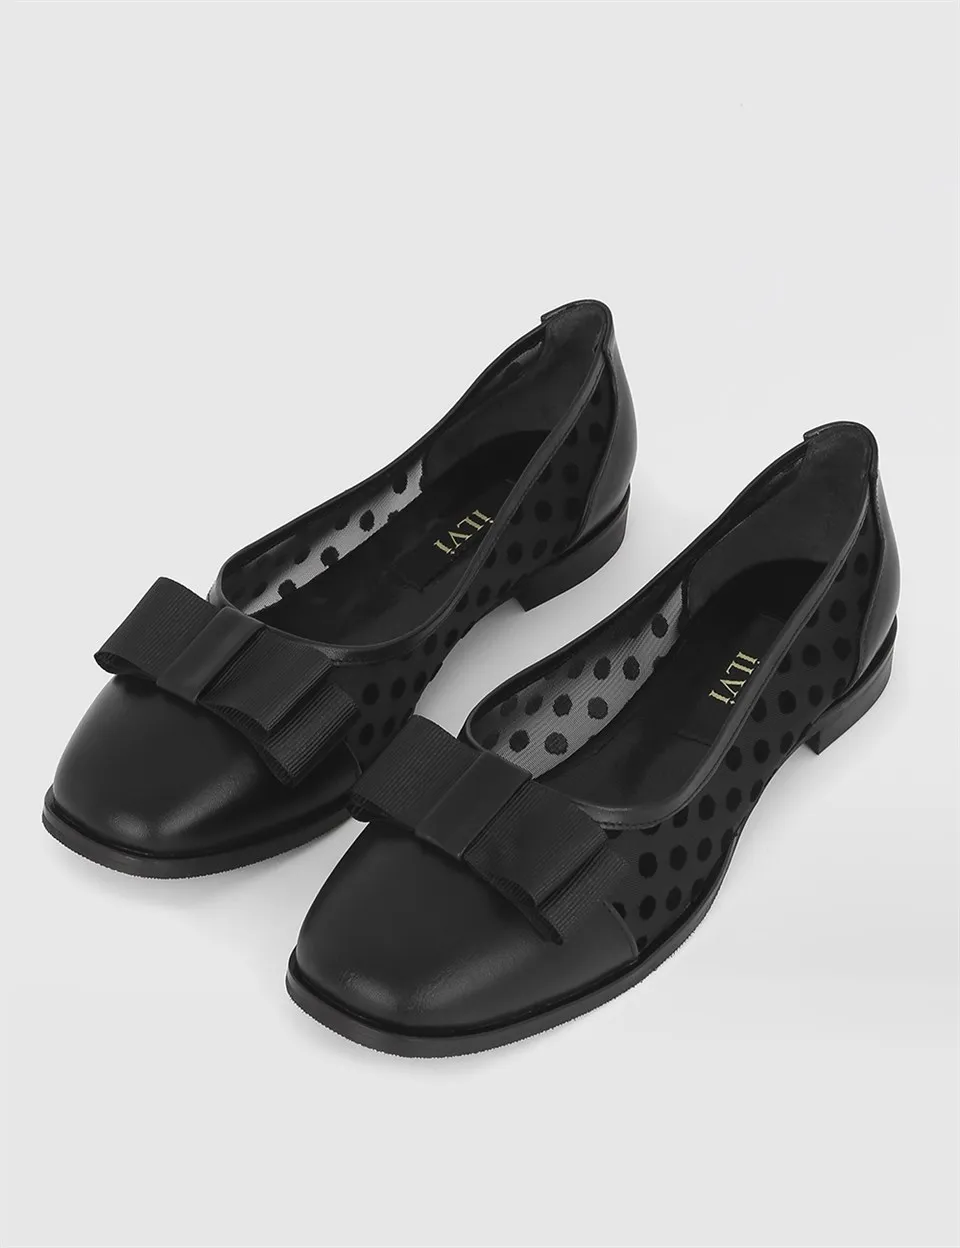 

ILVi-Genuine Leather Handmade Solo Black Leather Women's Ballerina Women Shoes 2021 Spring/Summer